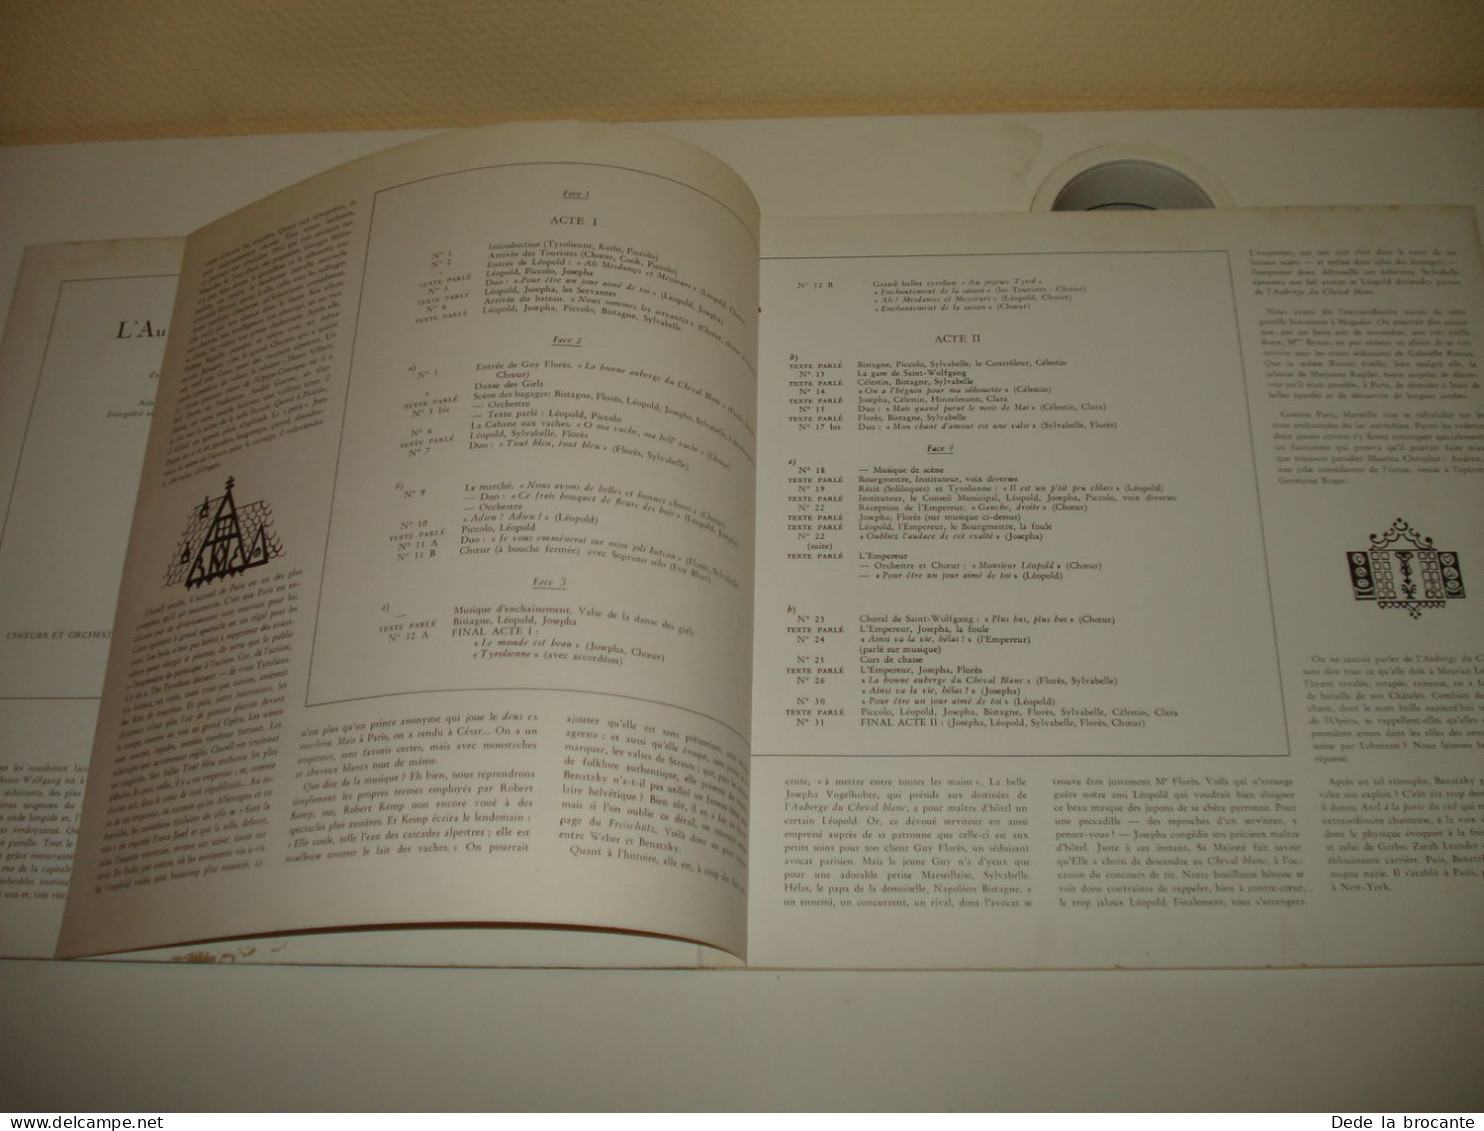 B14 / Auberge Du Cheval Blanc - 2 X LP – Pathé - 2C 161-12087/8 - Fr 1972  M/NM - Musicals